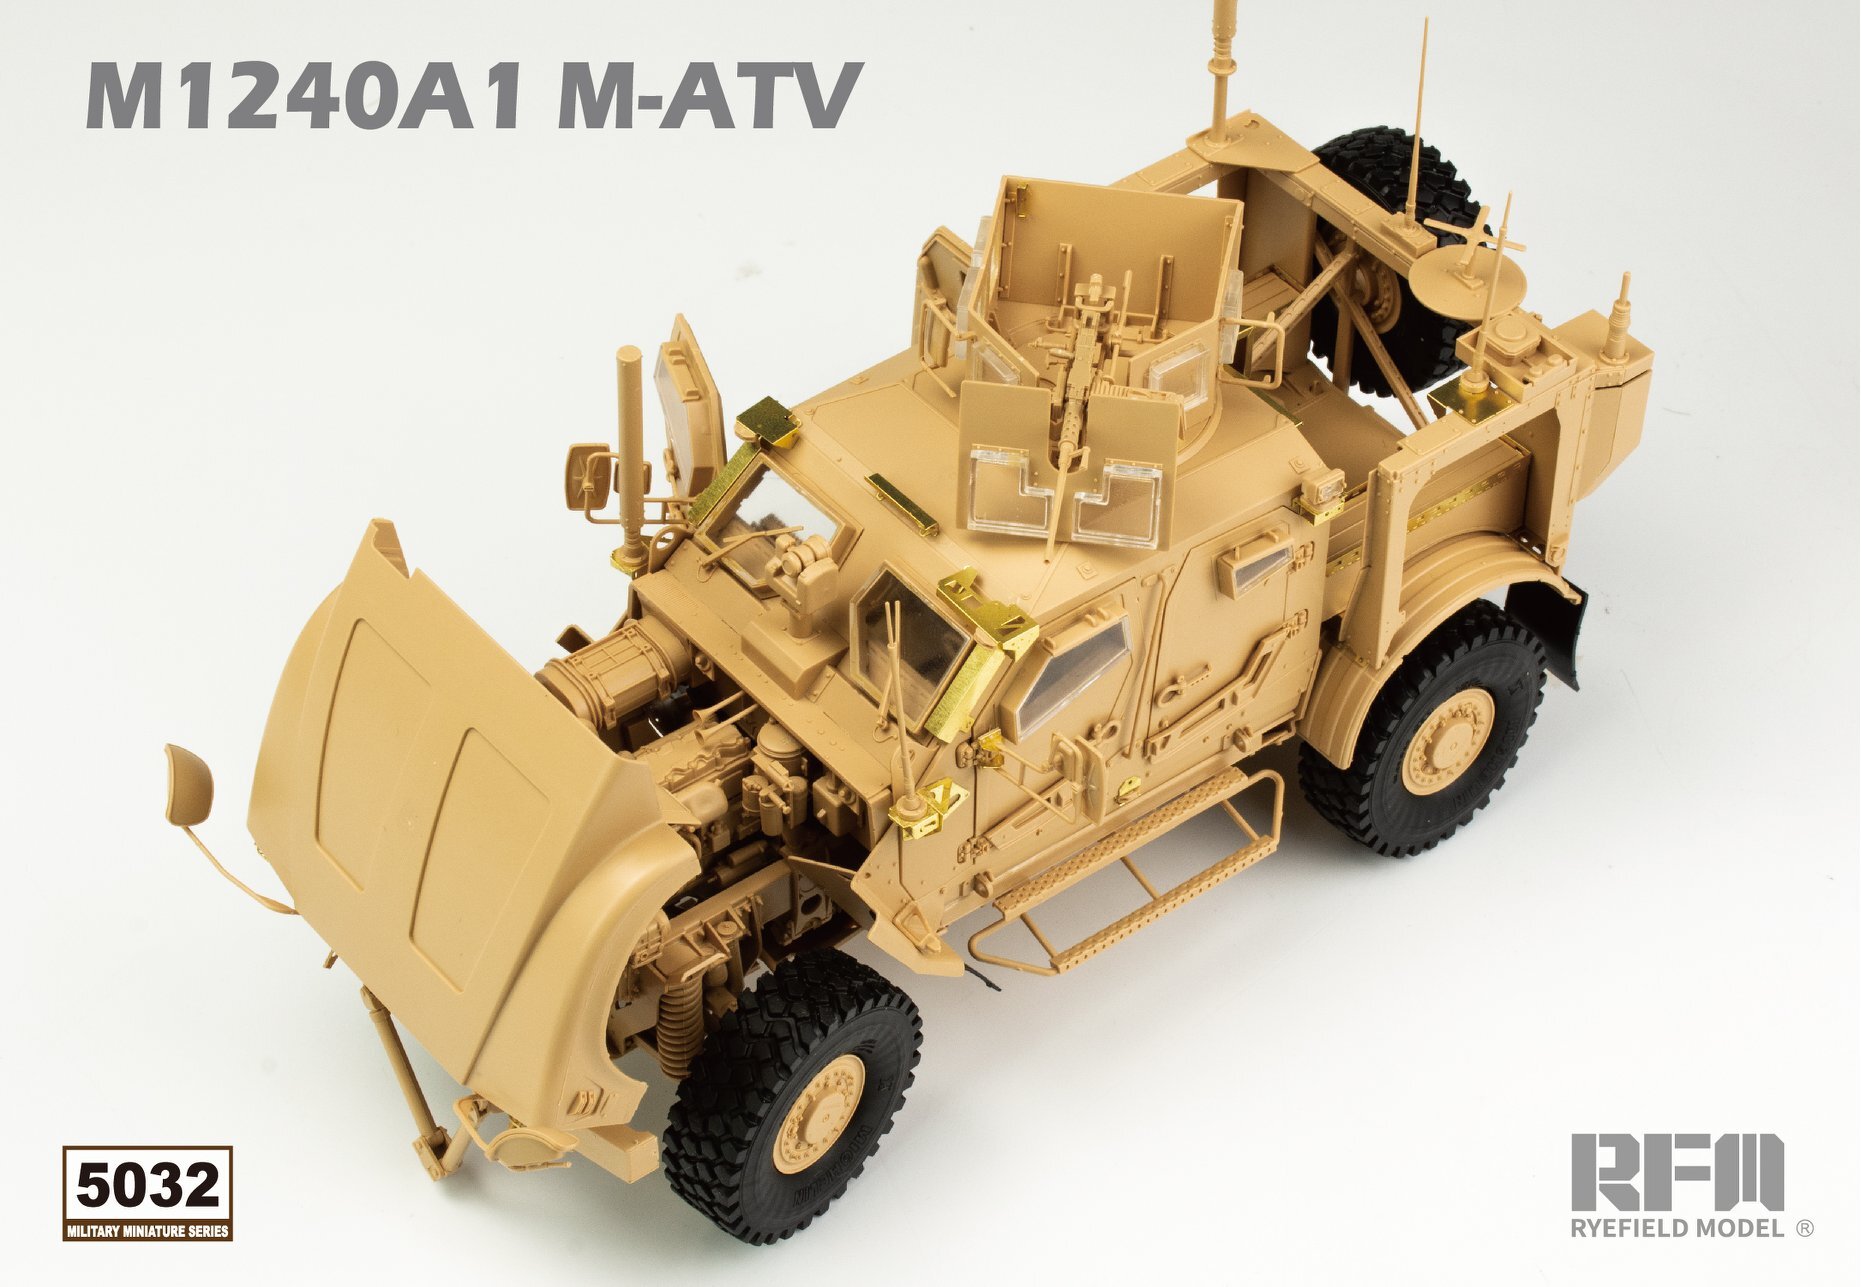 Details about   1/35 Rye Field Models US MRAP M-ATV M1240A1 #5032